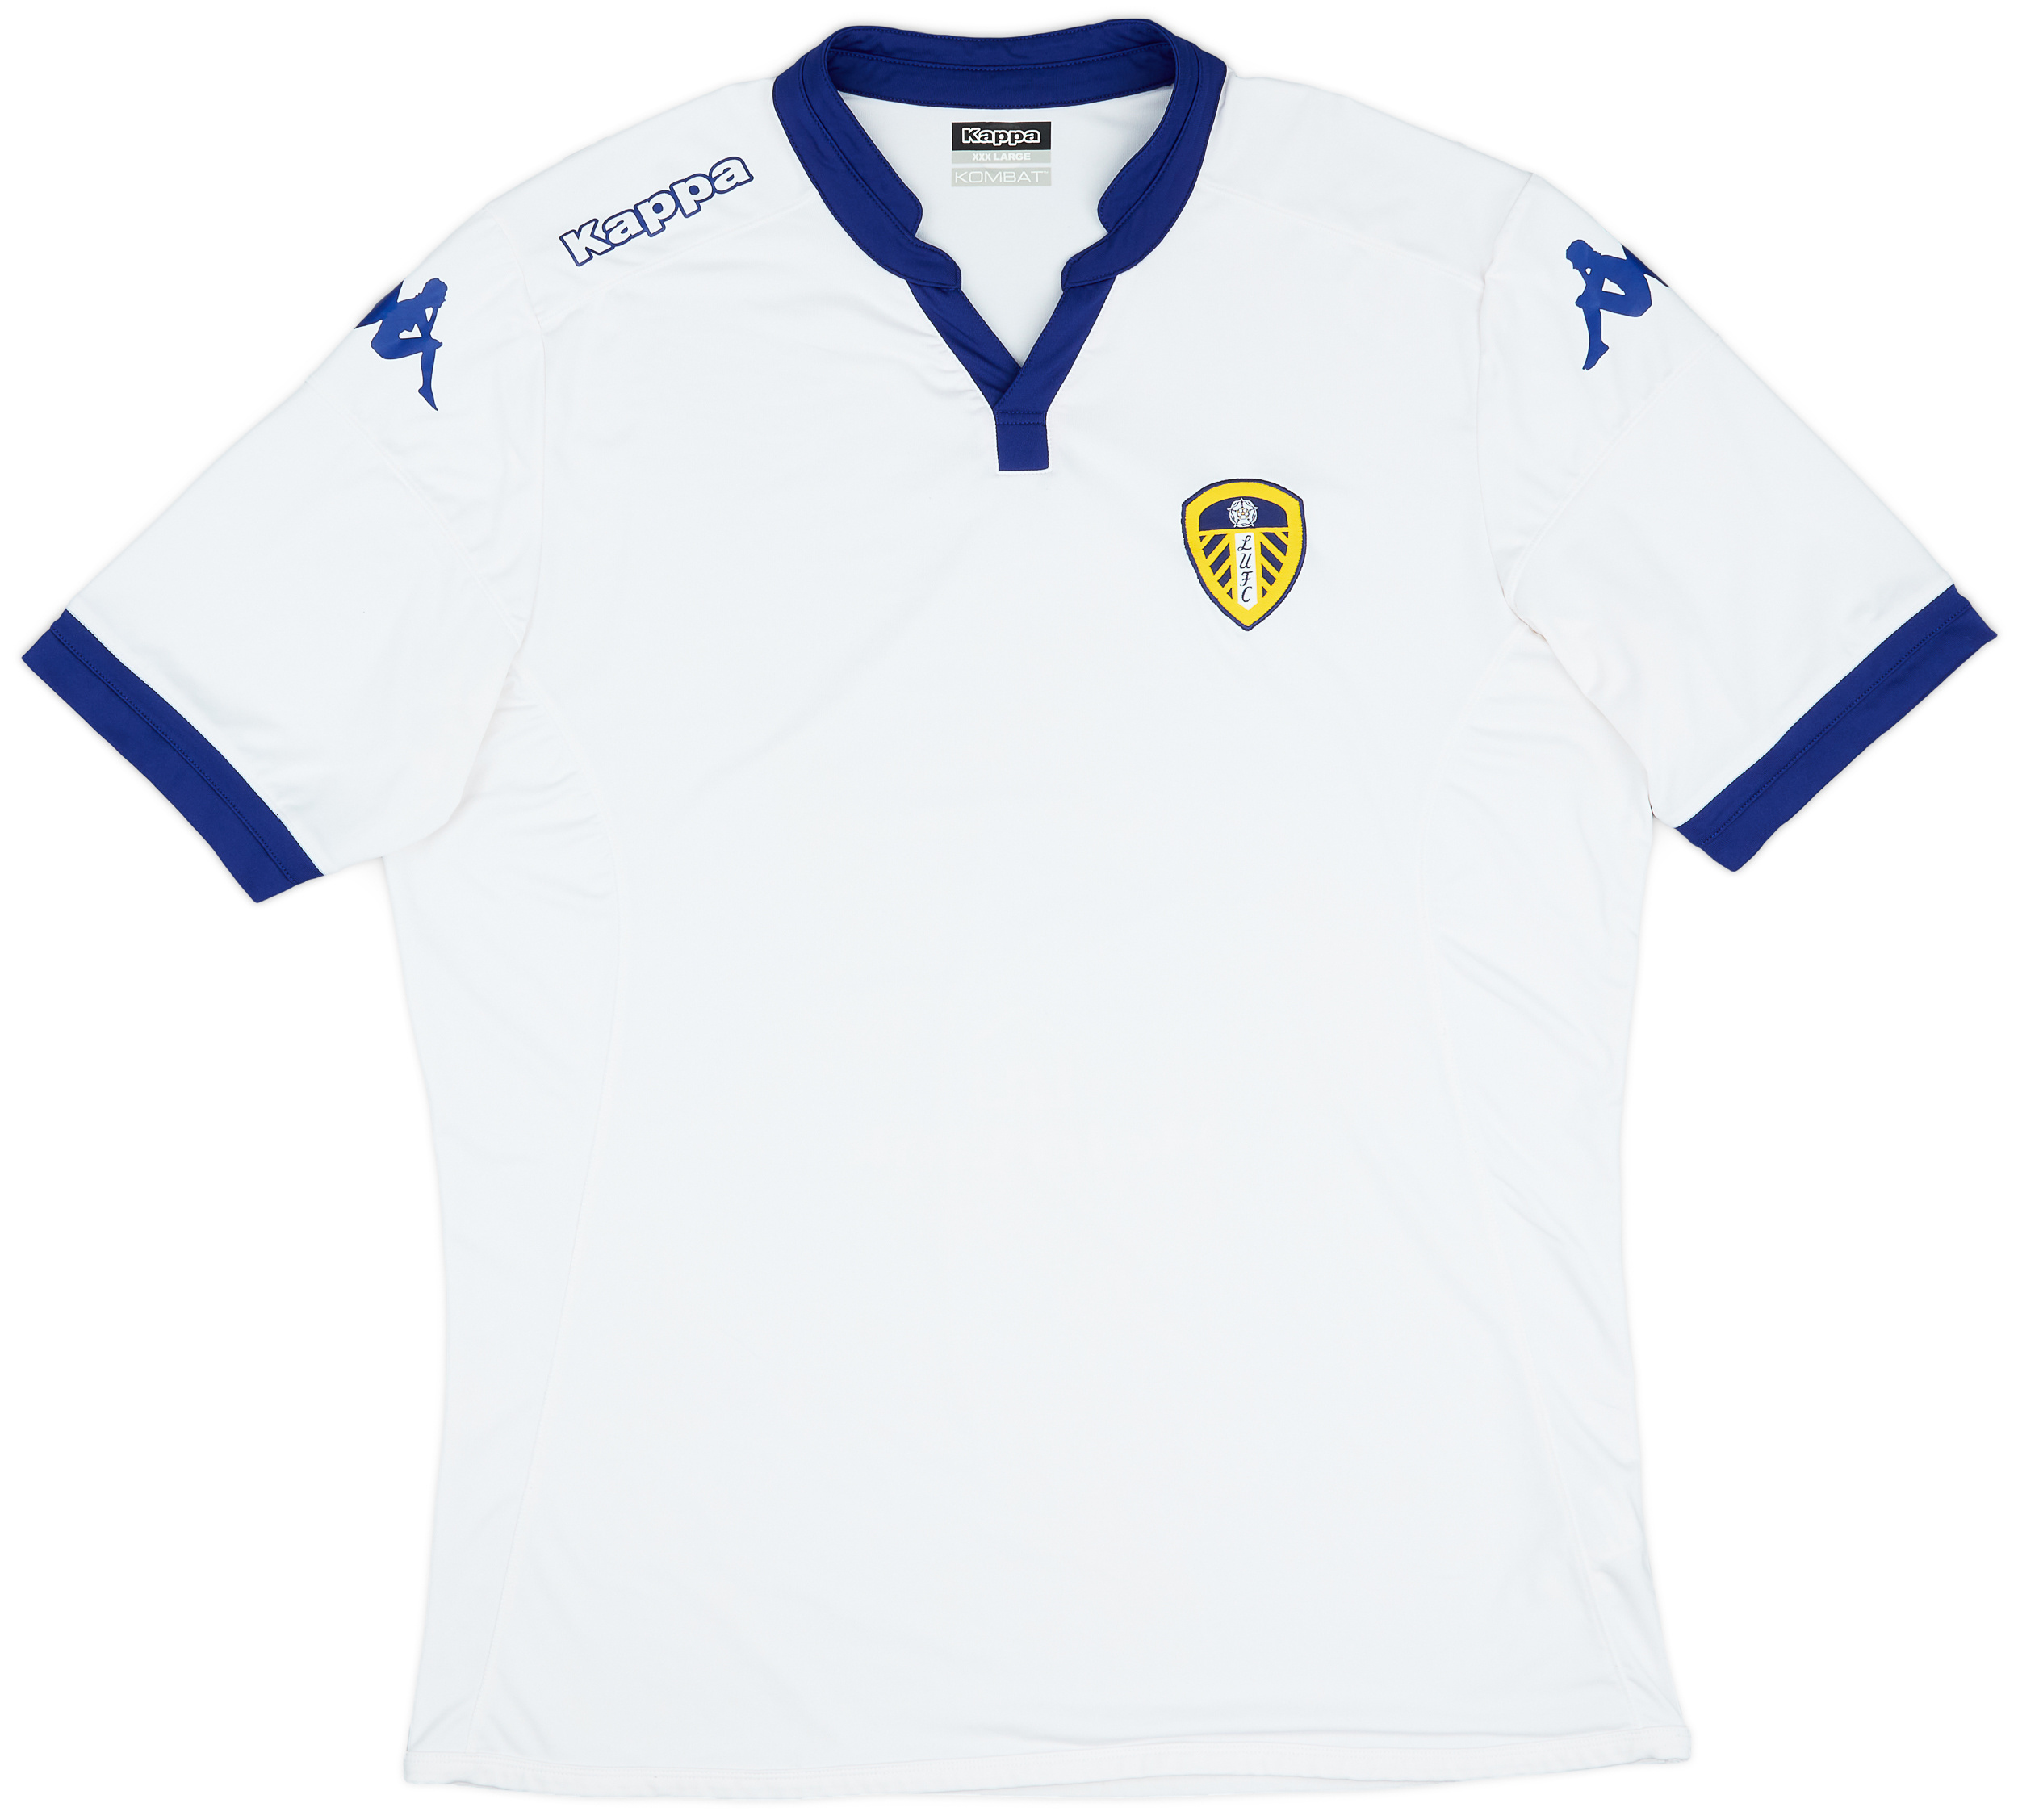 2015-16 Leeds United Home Shirt - 9/10 - ()